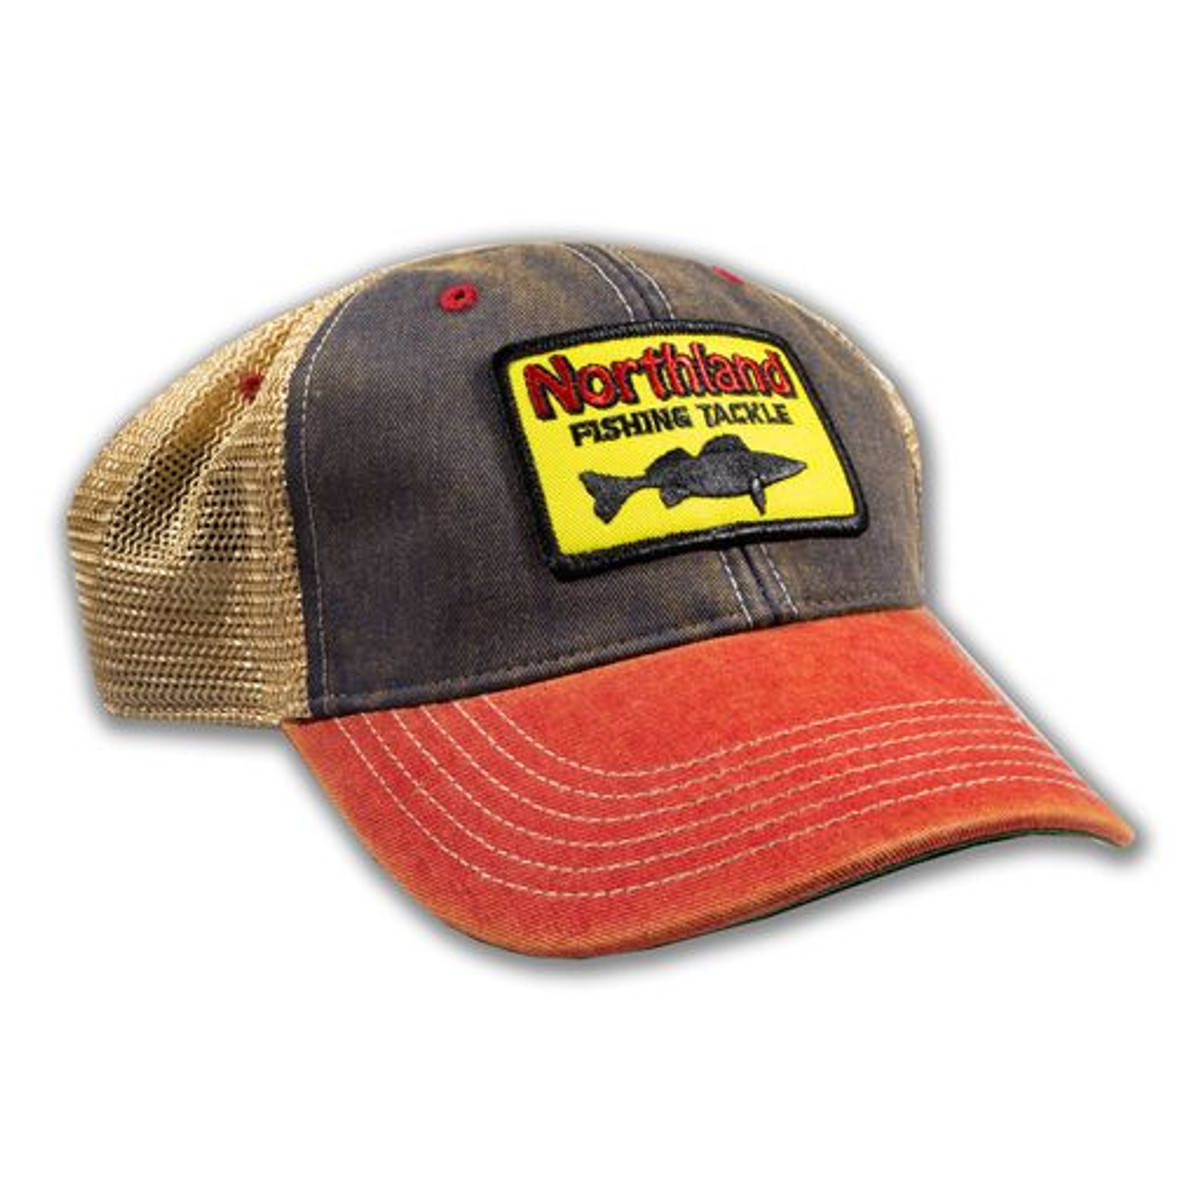 WAR EAGLE Fishing Custom Lures Trucker Hat Caps,Rogers, AR,Red,Never Worn